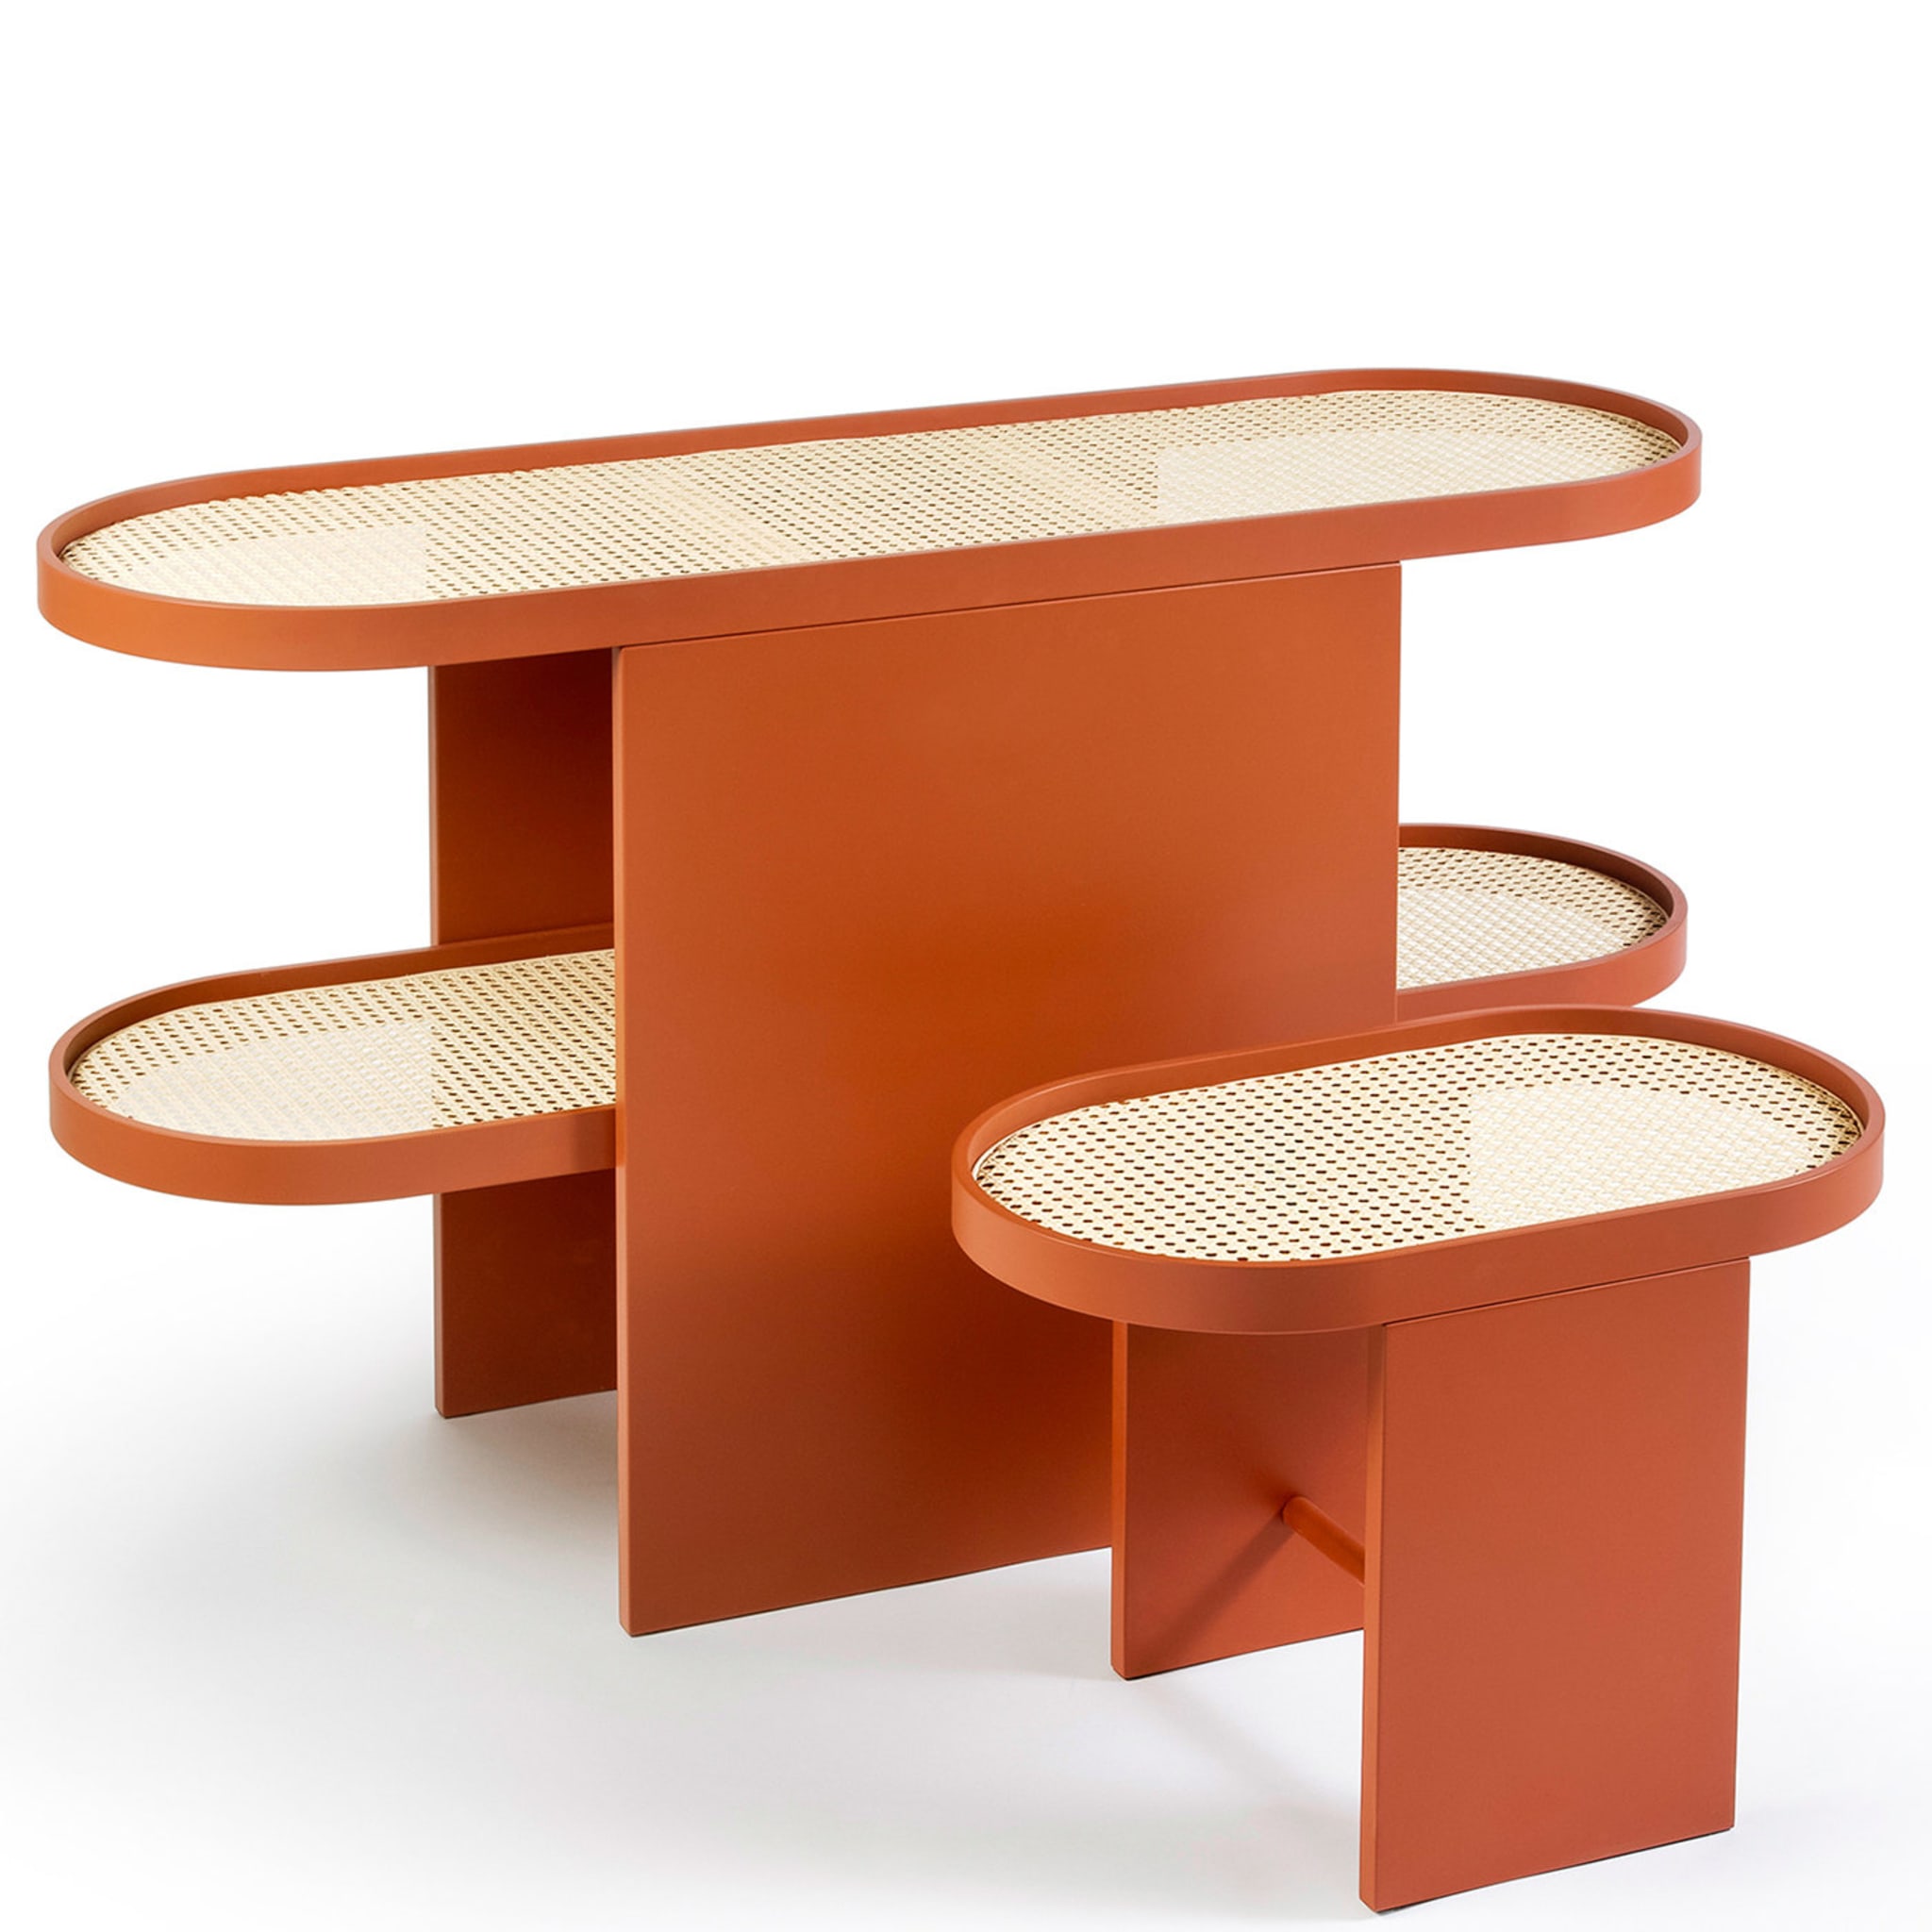 Piani Copper Side Table by Patricia Urquiola - Alternative view 3